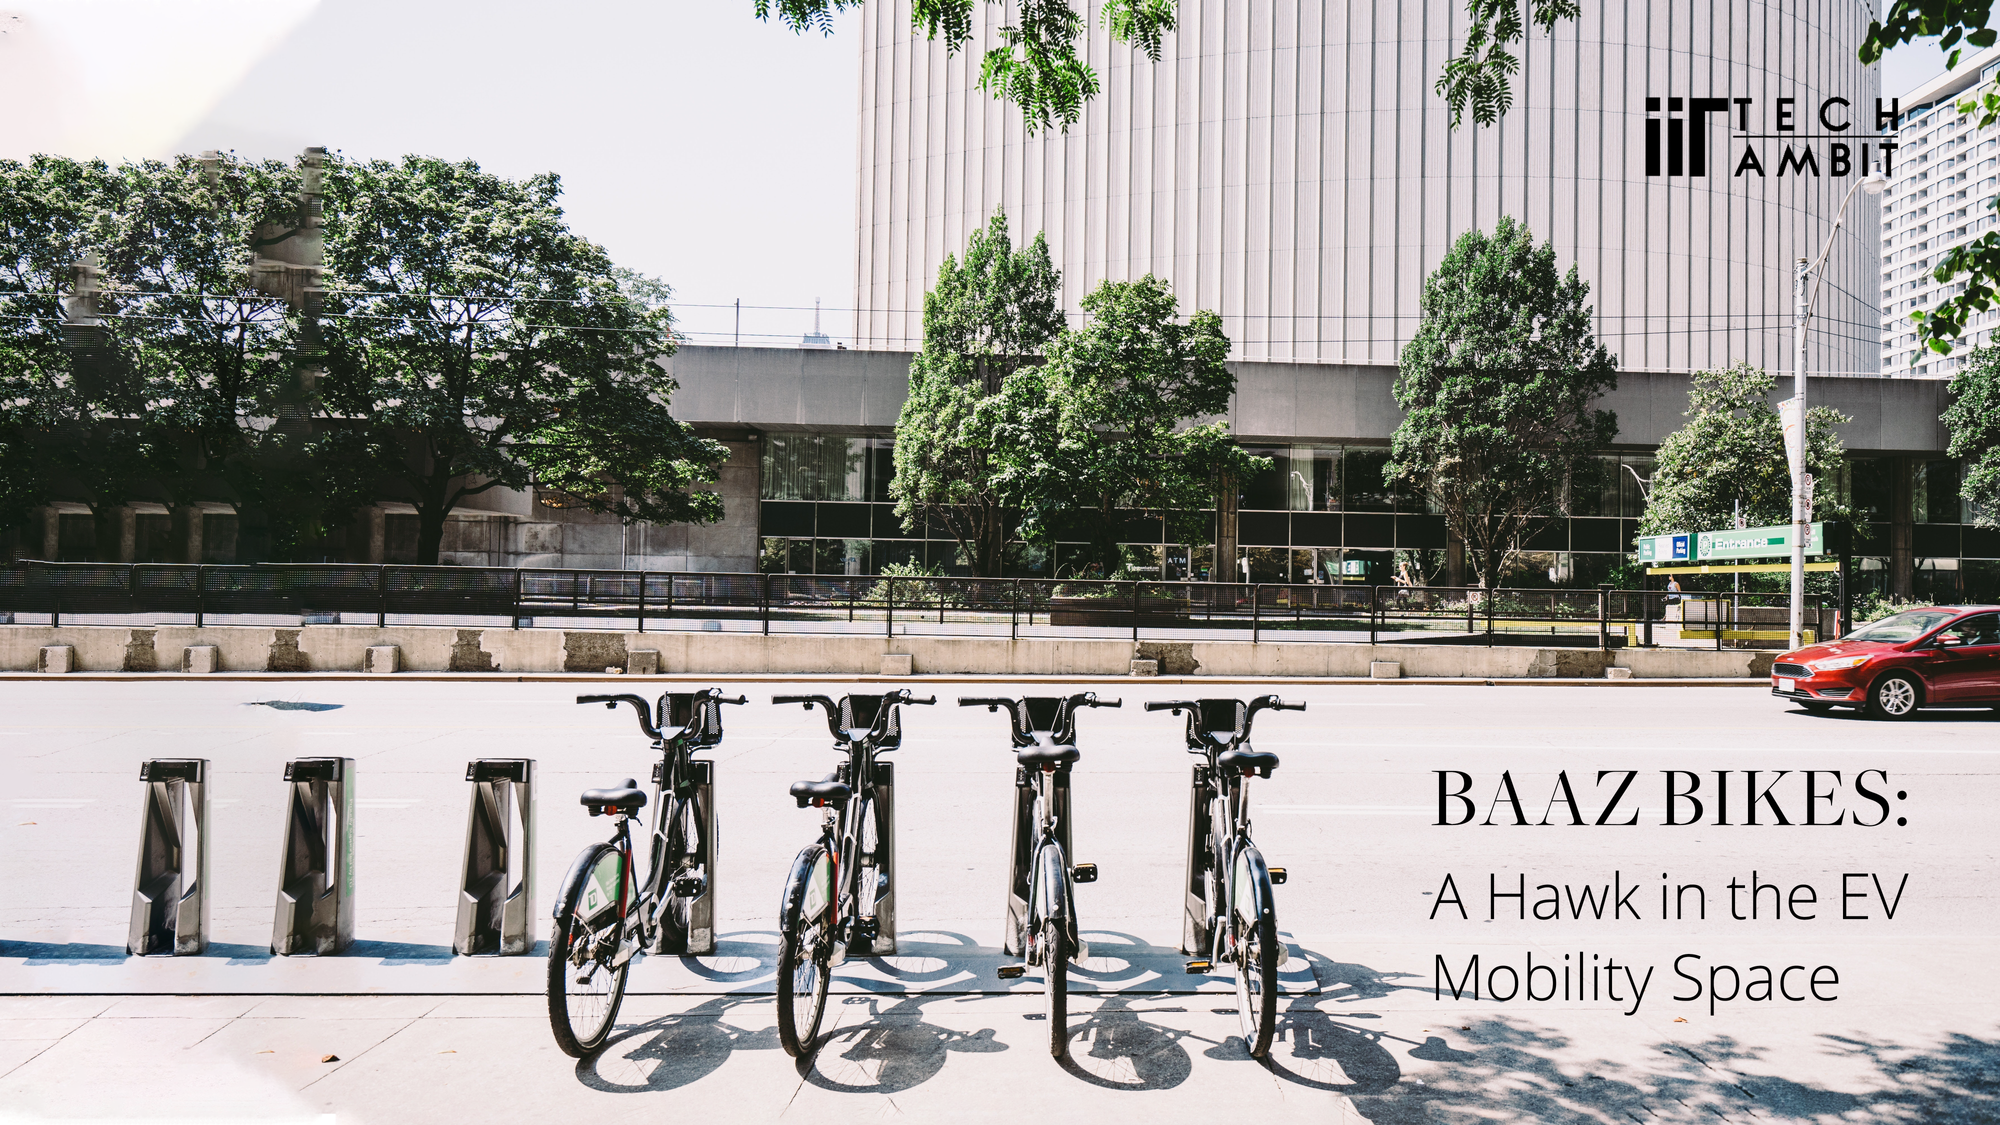 Baaz Bikes: A Hawk in the EV Mobility Space